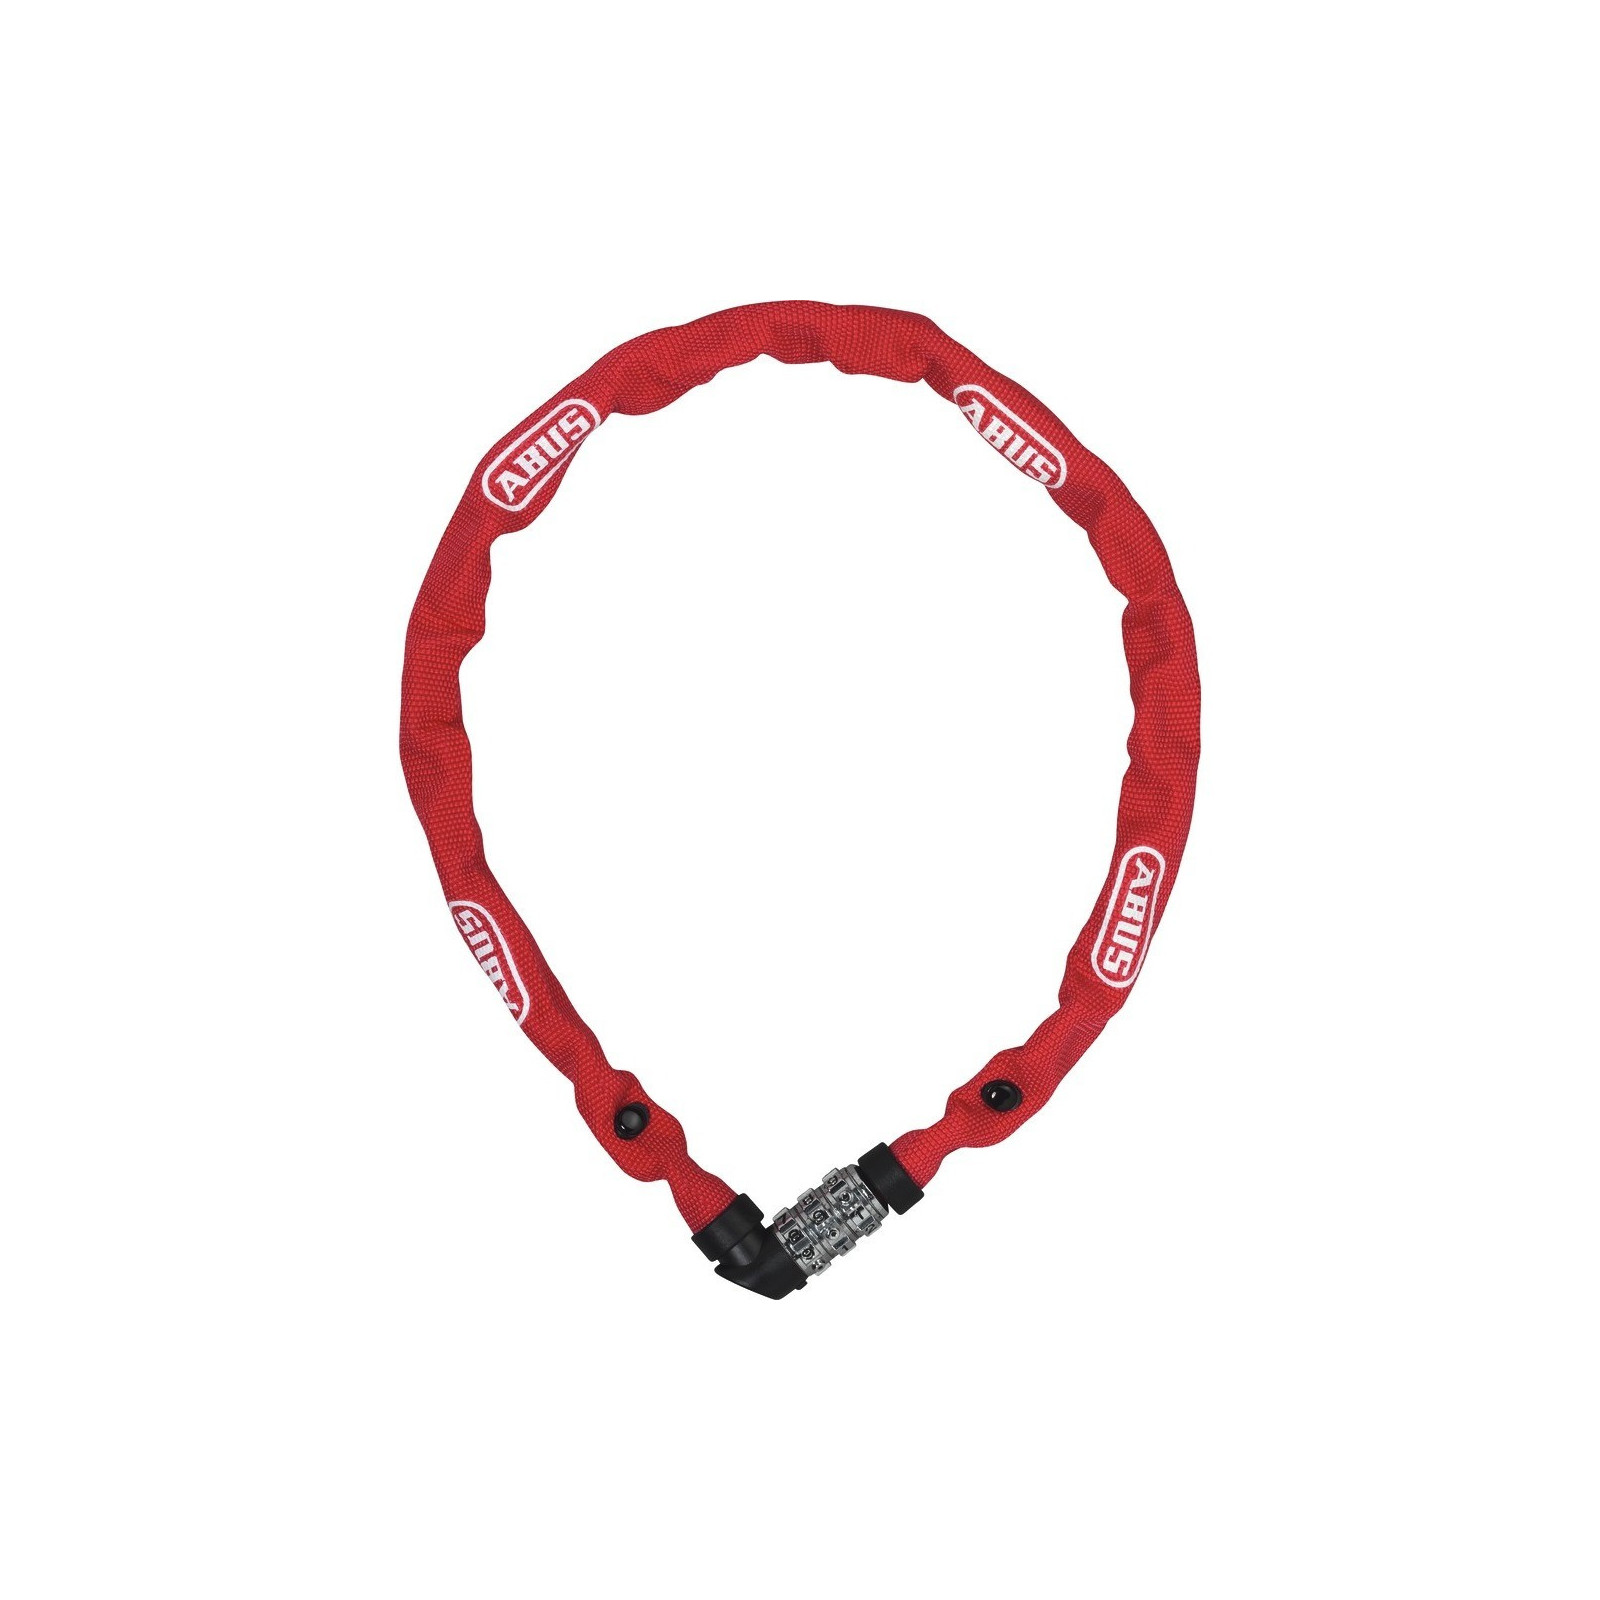 Abus 1200/60 Web Red Chain Lock - 60 cm